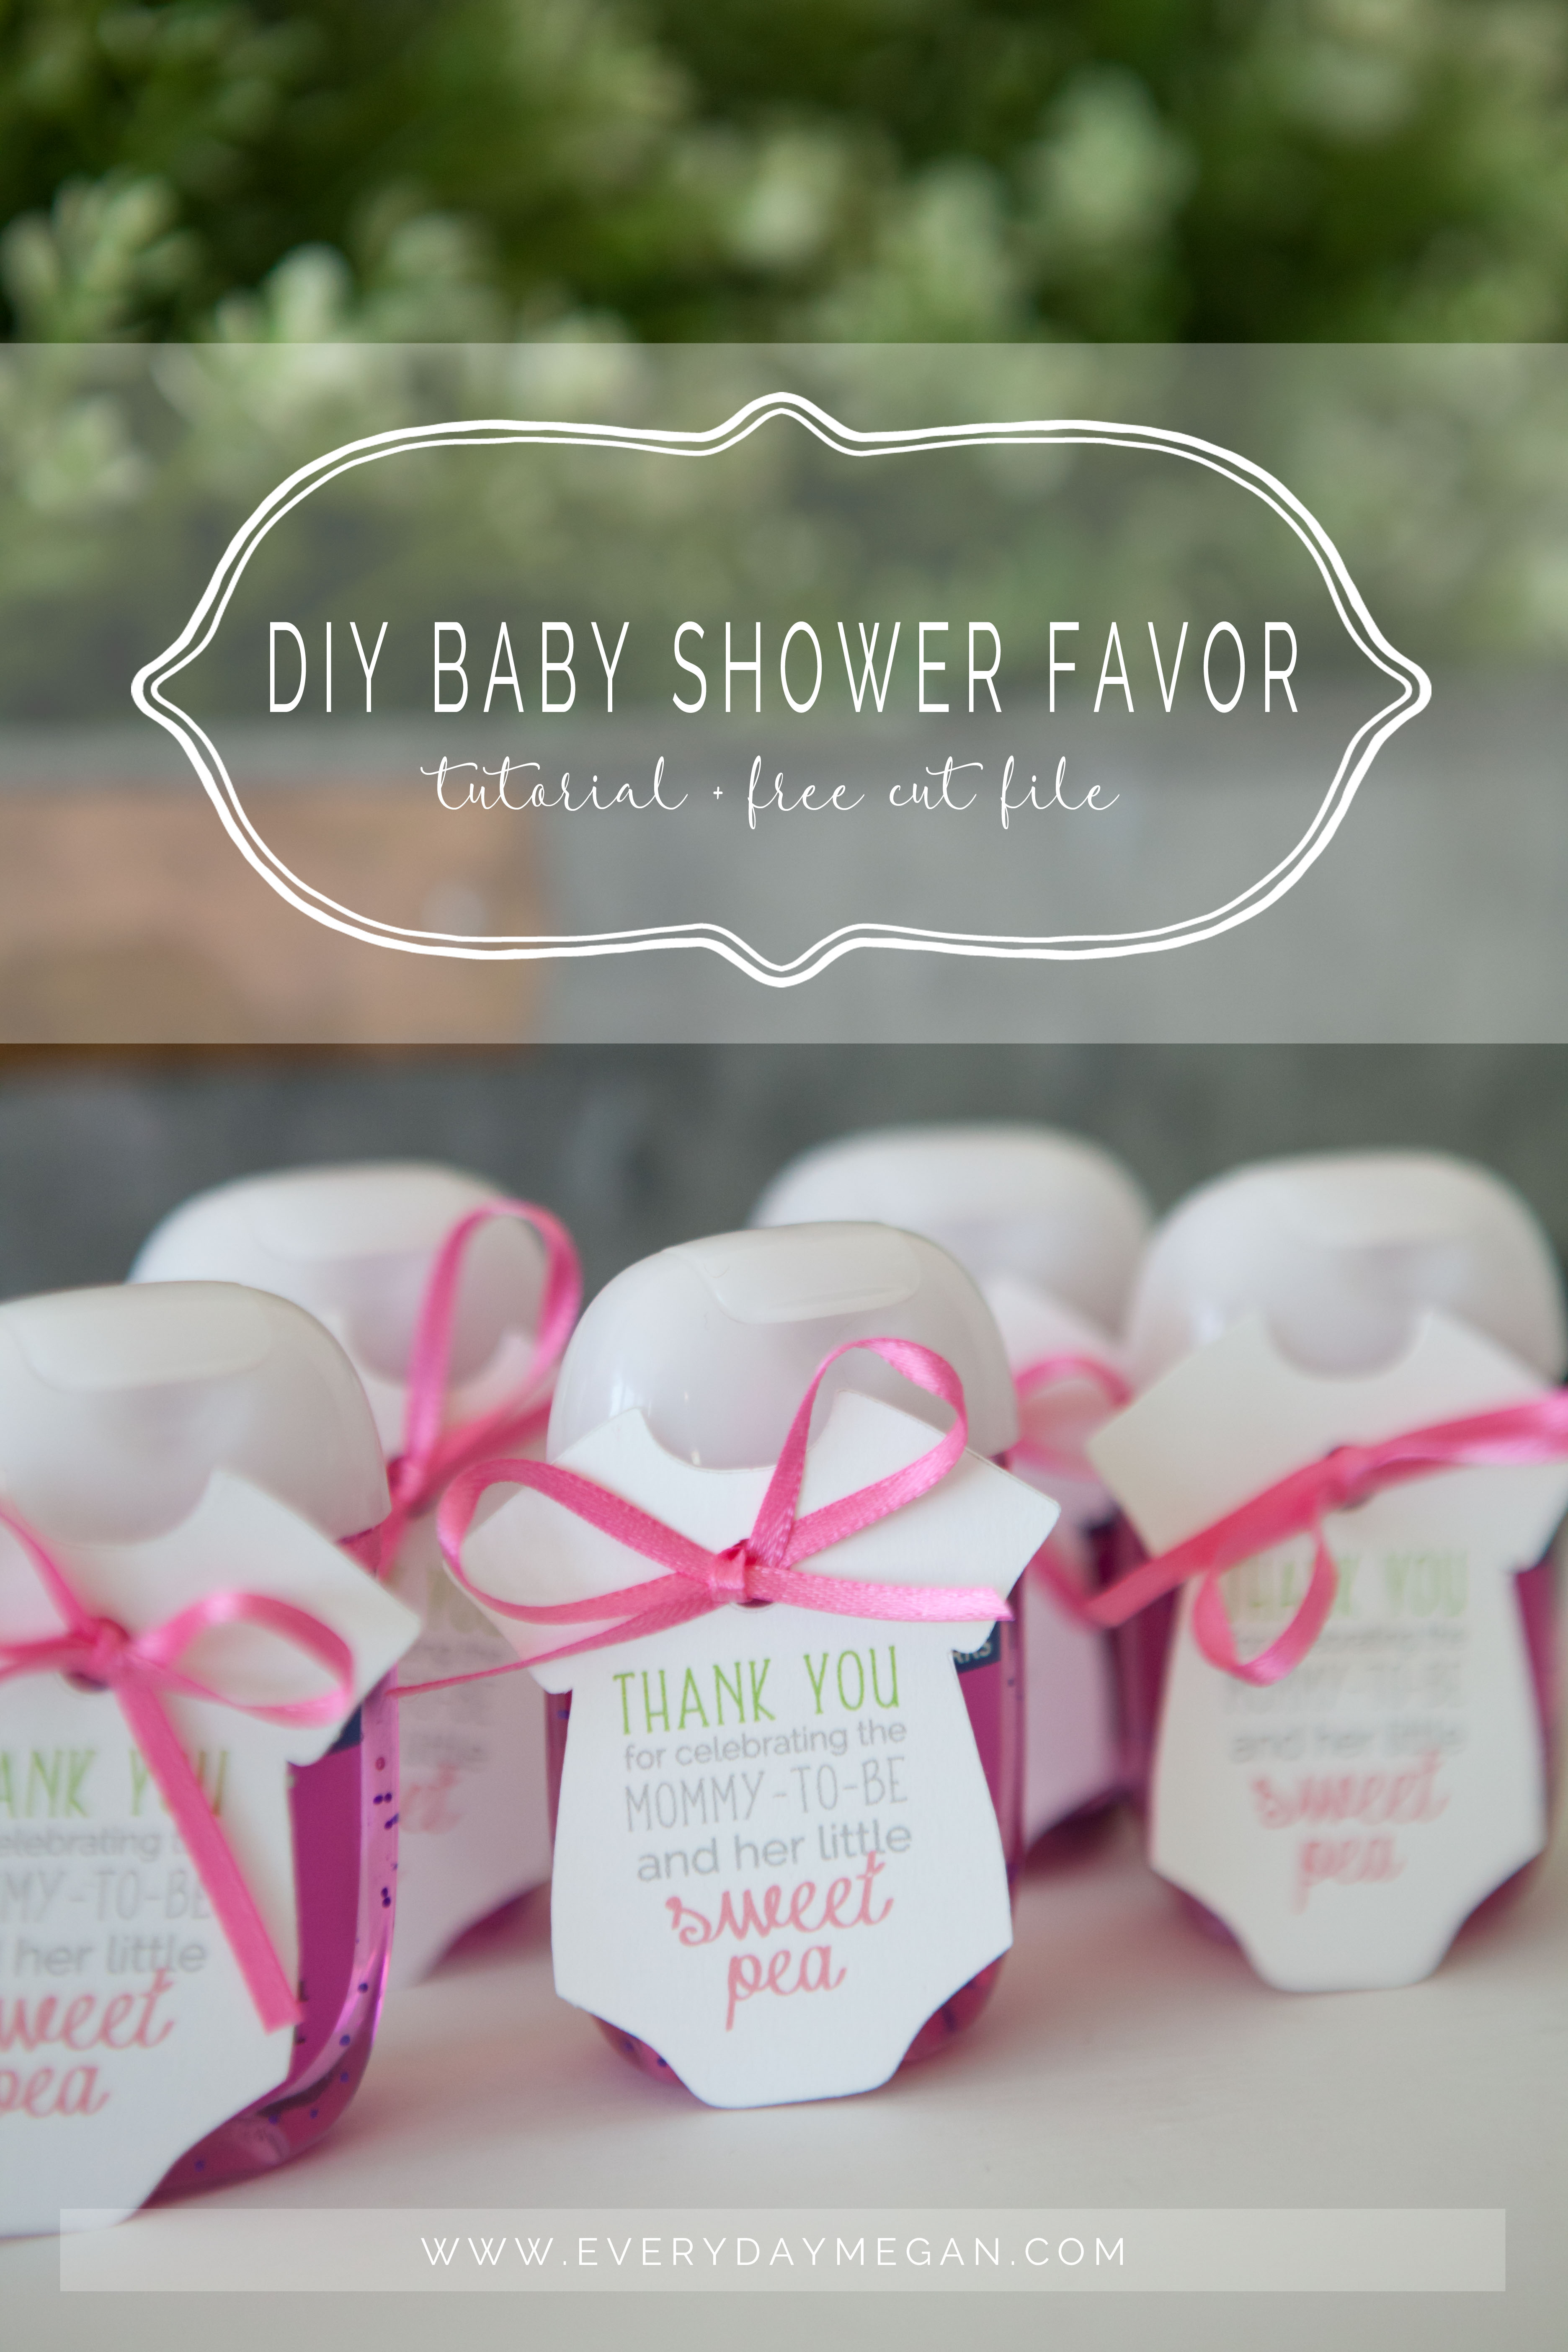 Download How To Make A Diy Baby Shower Favor Everyday Megan